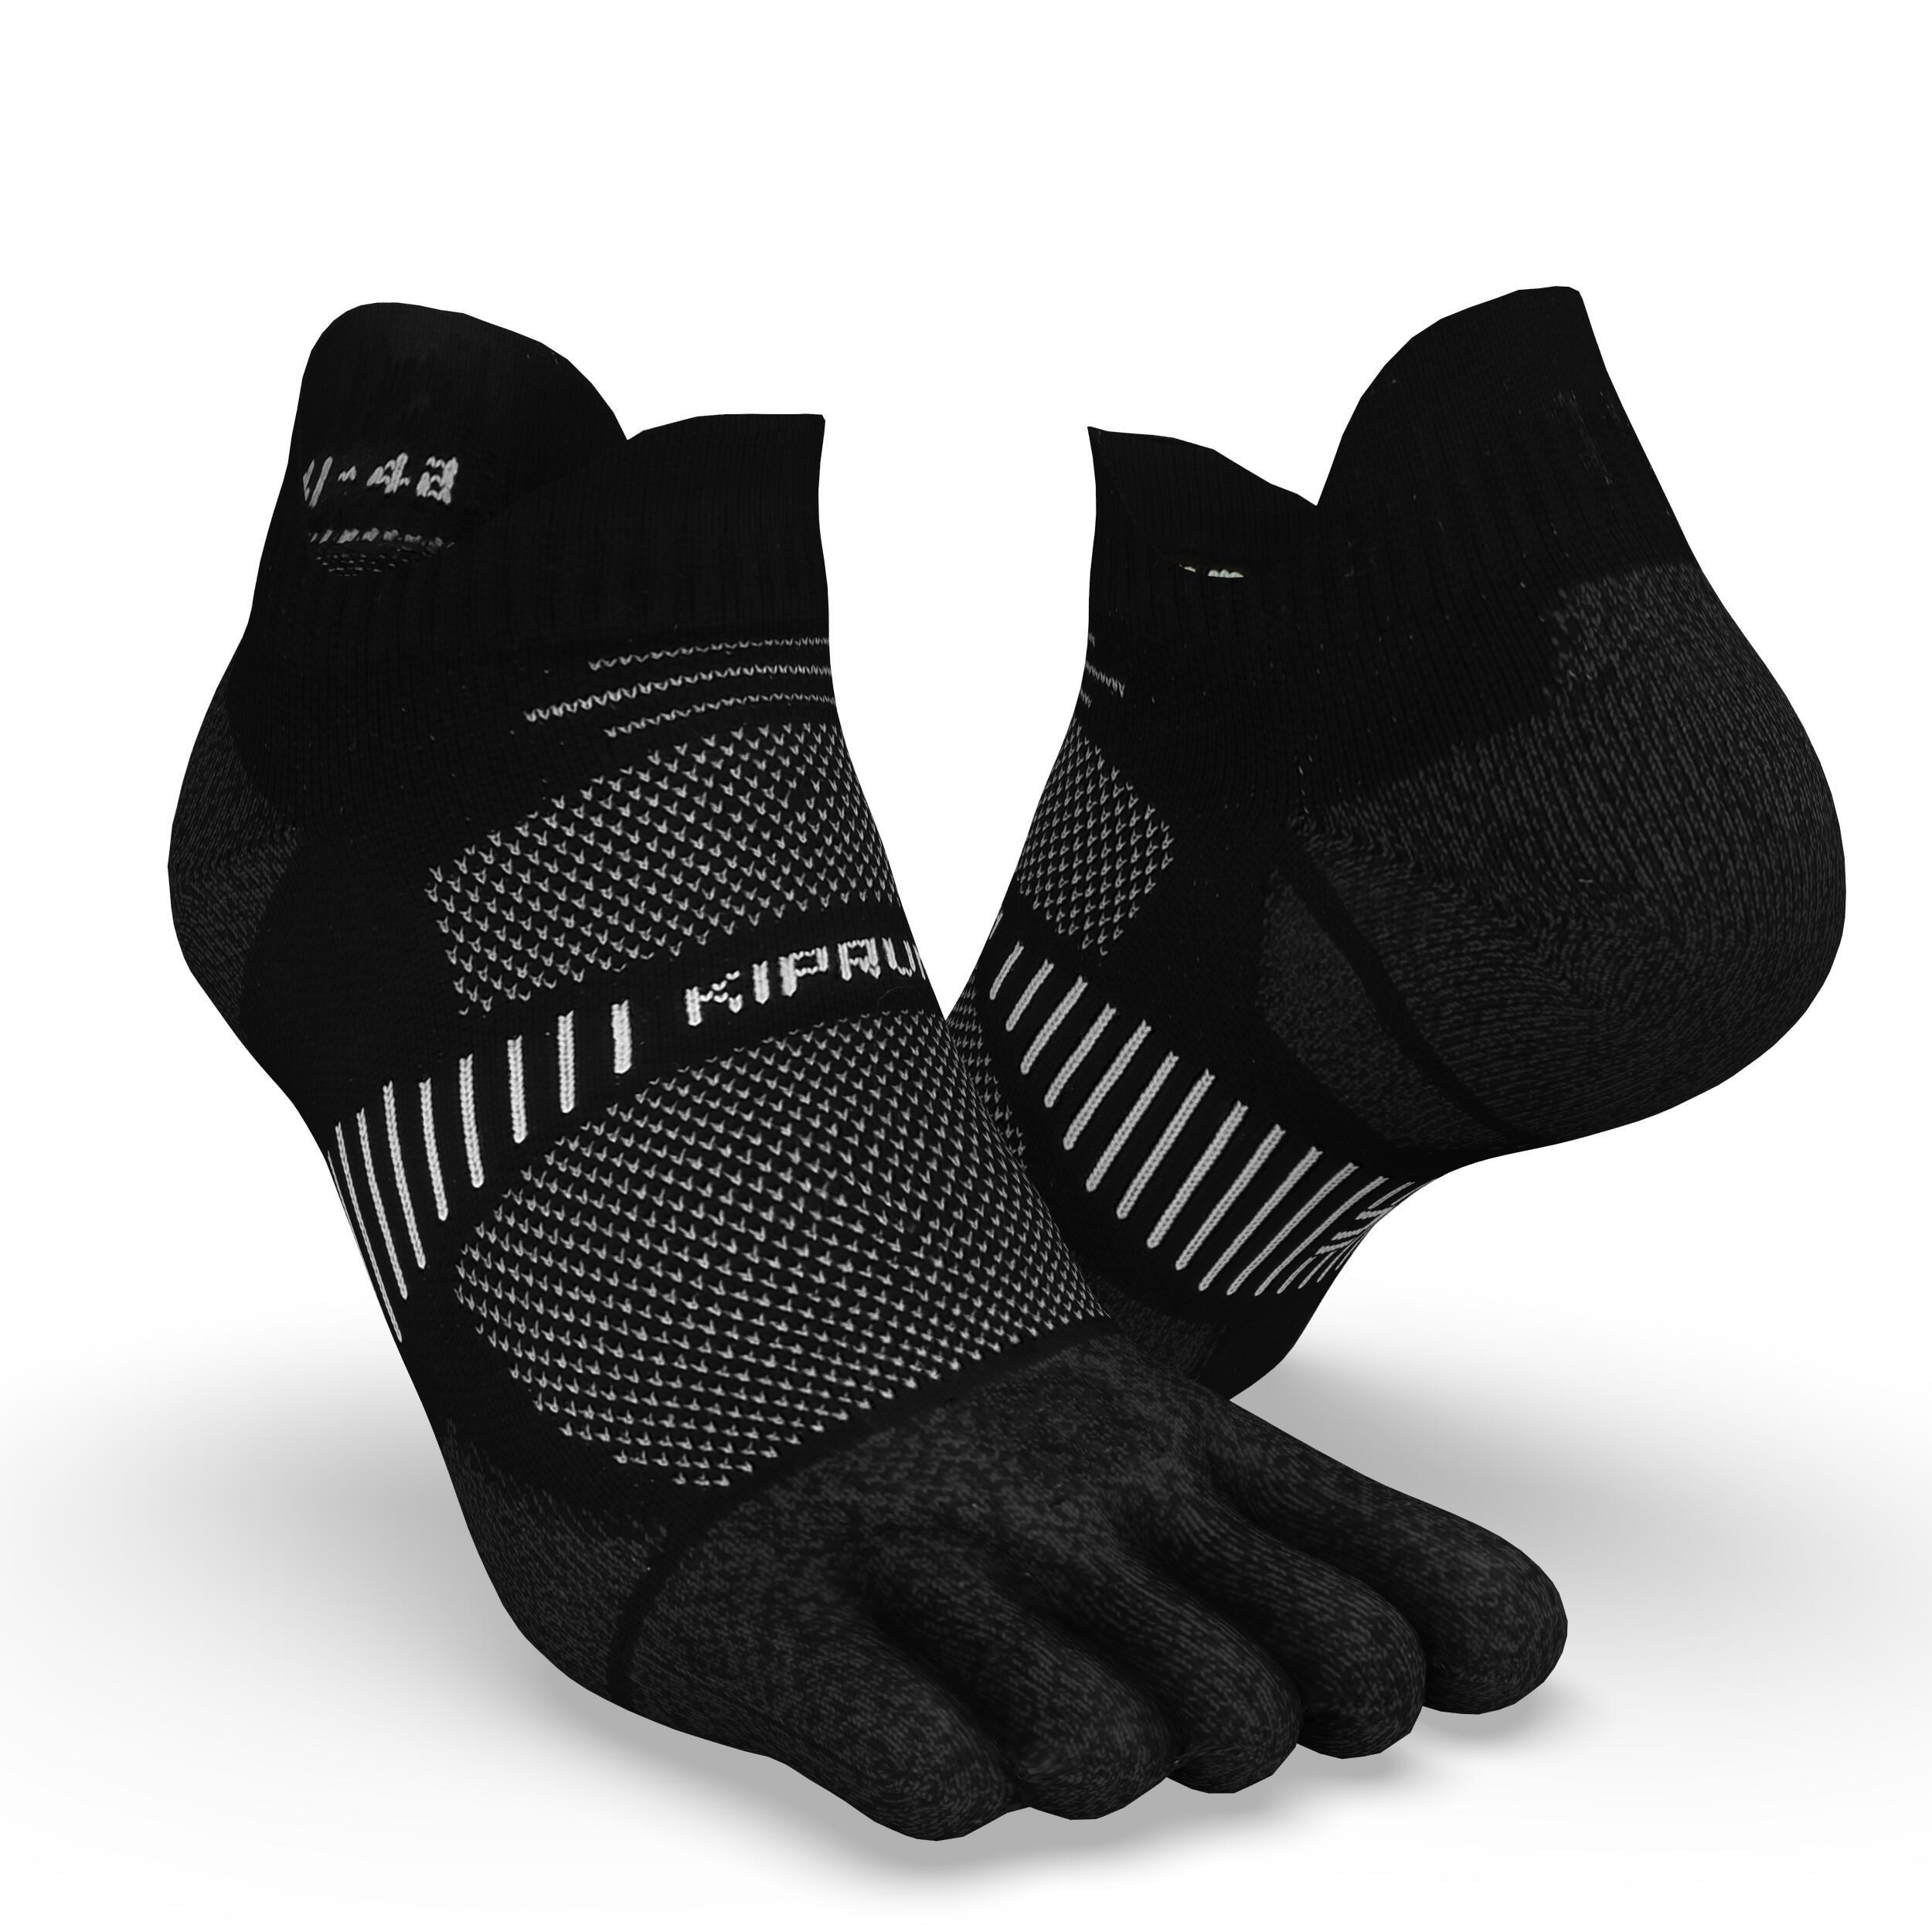 https://contents.mediadecathlon.com/p2196946/k$3a50e555171ed8a226ff206d38190fa0/run900-running-5-finger-fine-socks-eco-design-black-kiprun-8664318.jpg